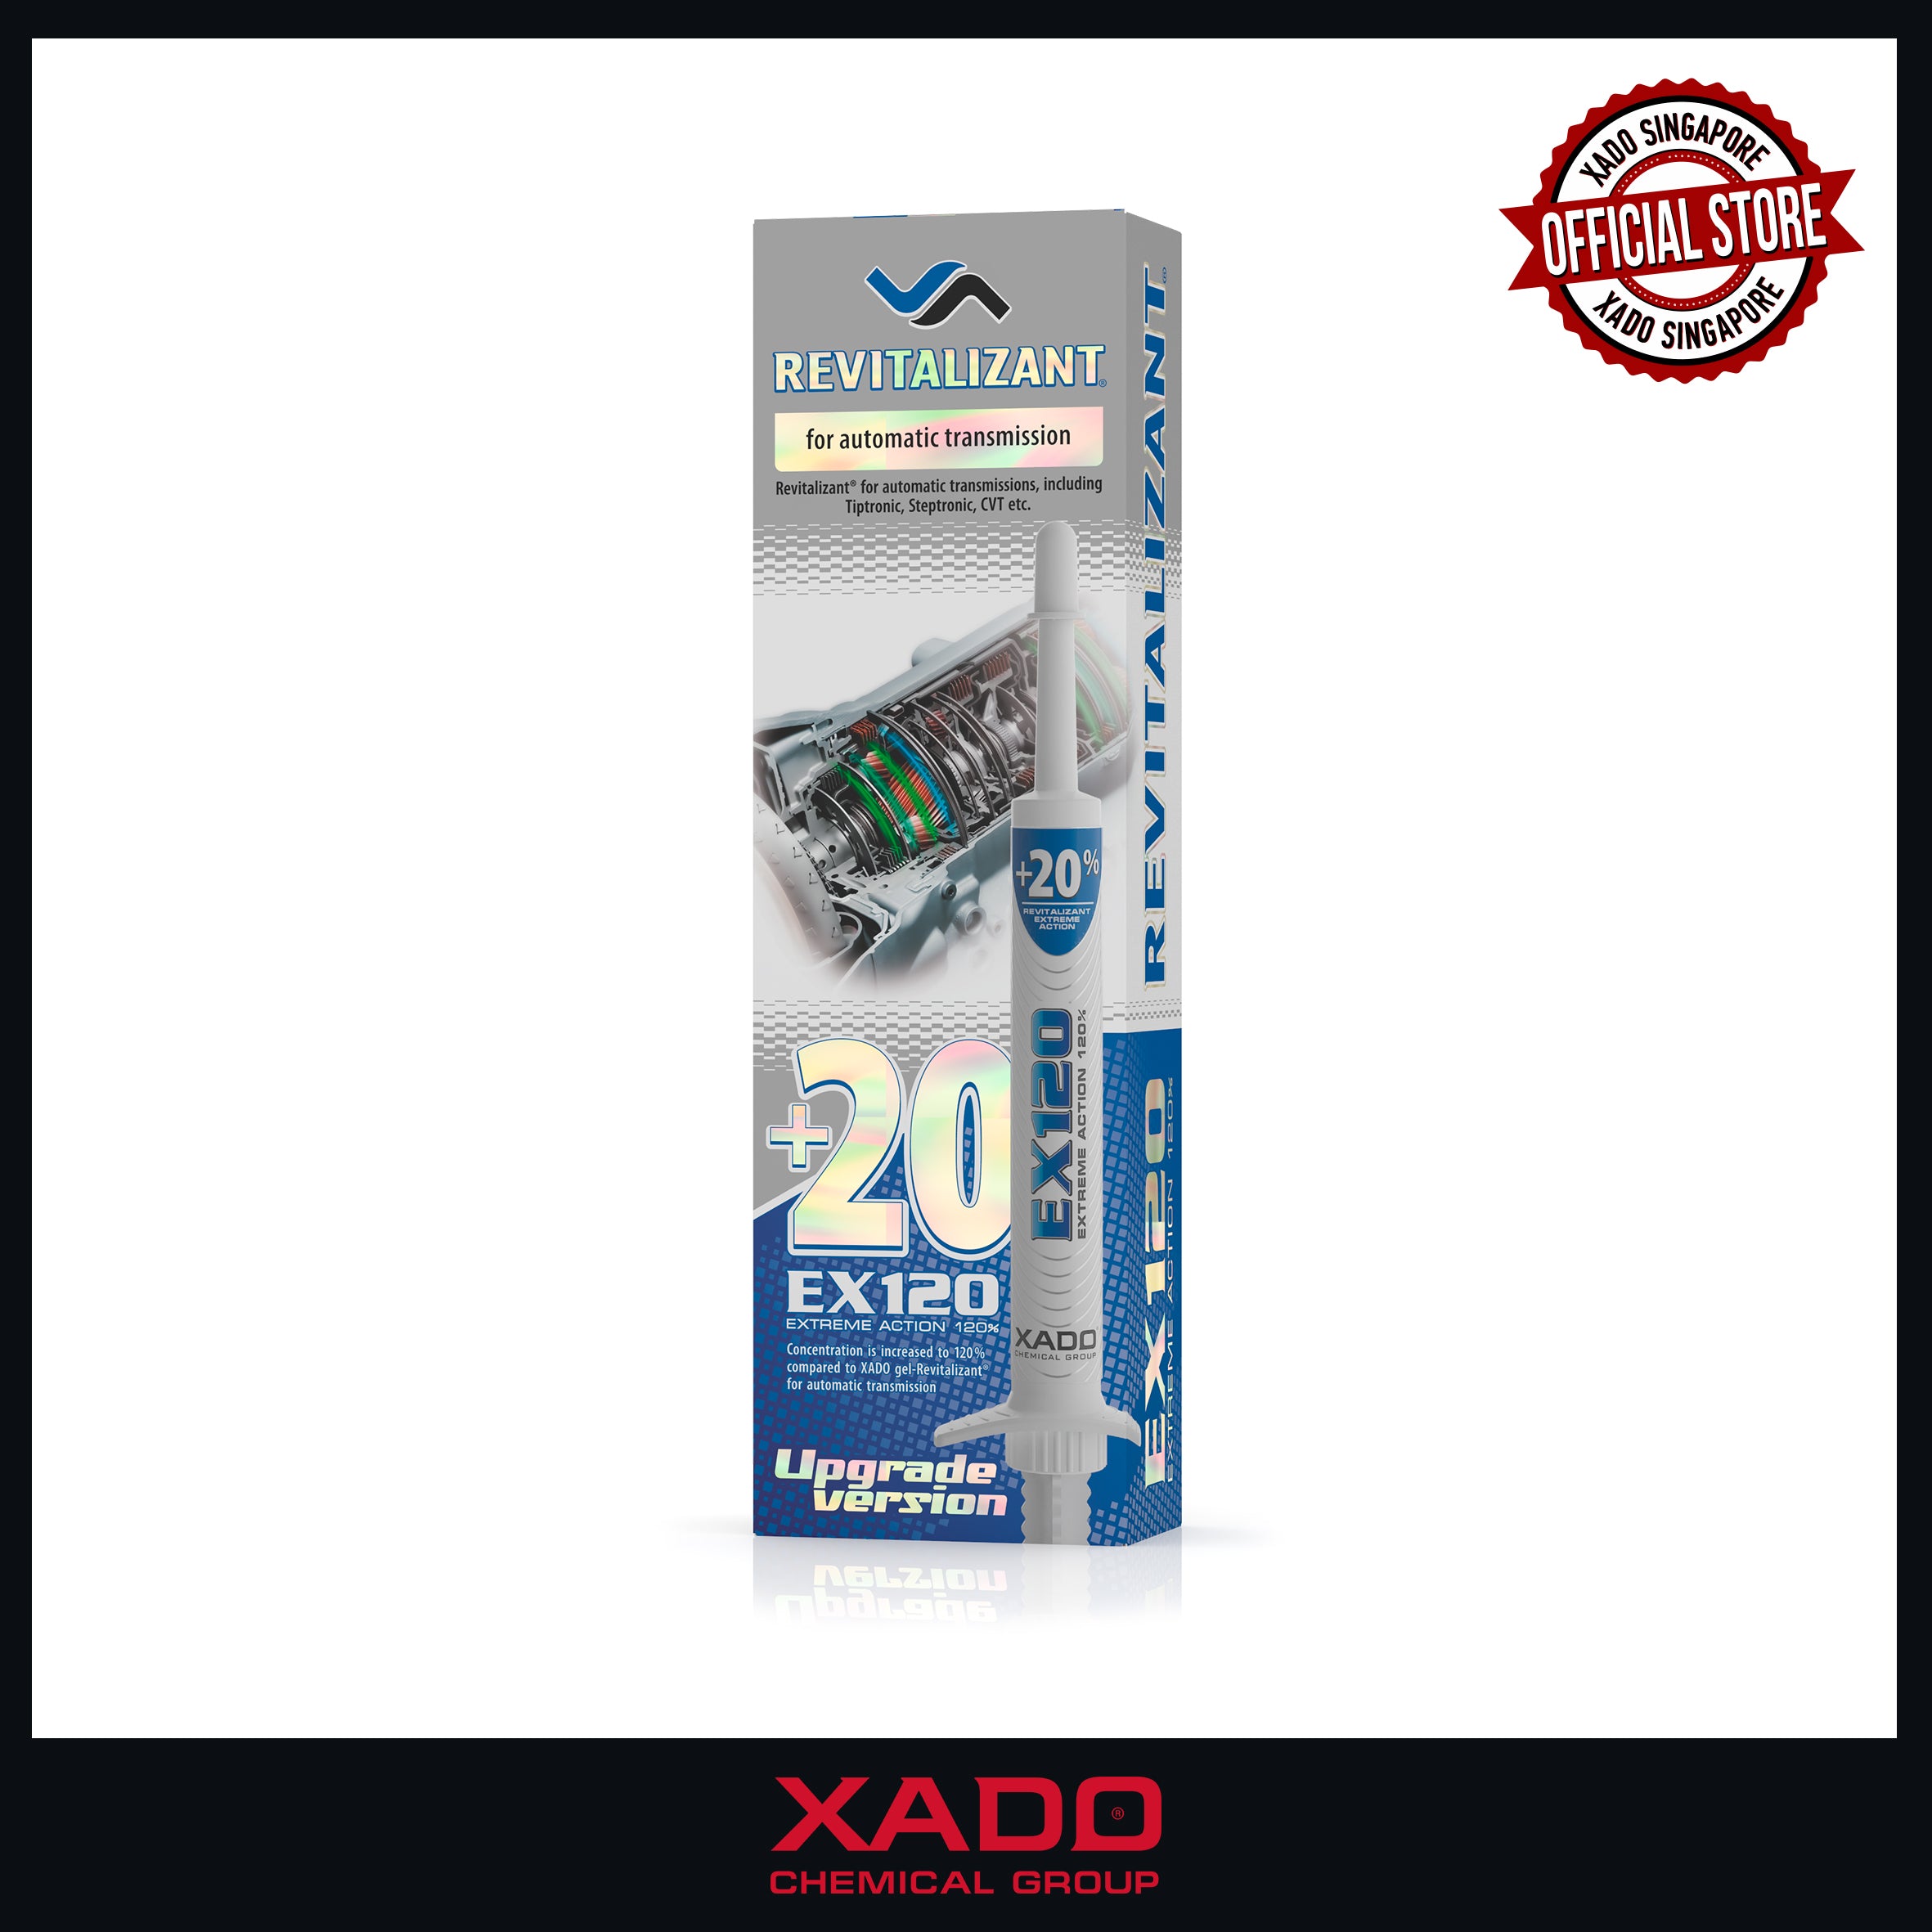 XADO EX120 Revitalizant Automatic Transmission – XADO Singapore Official  Online Store